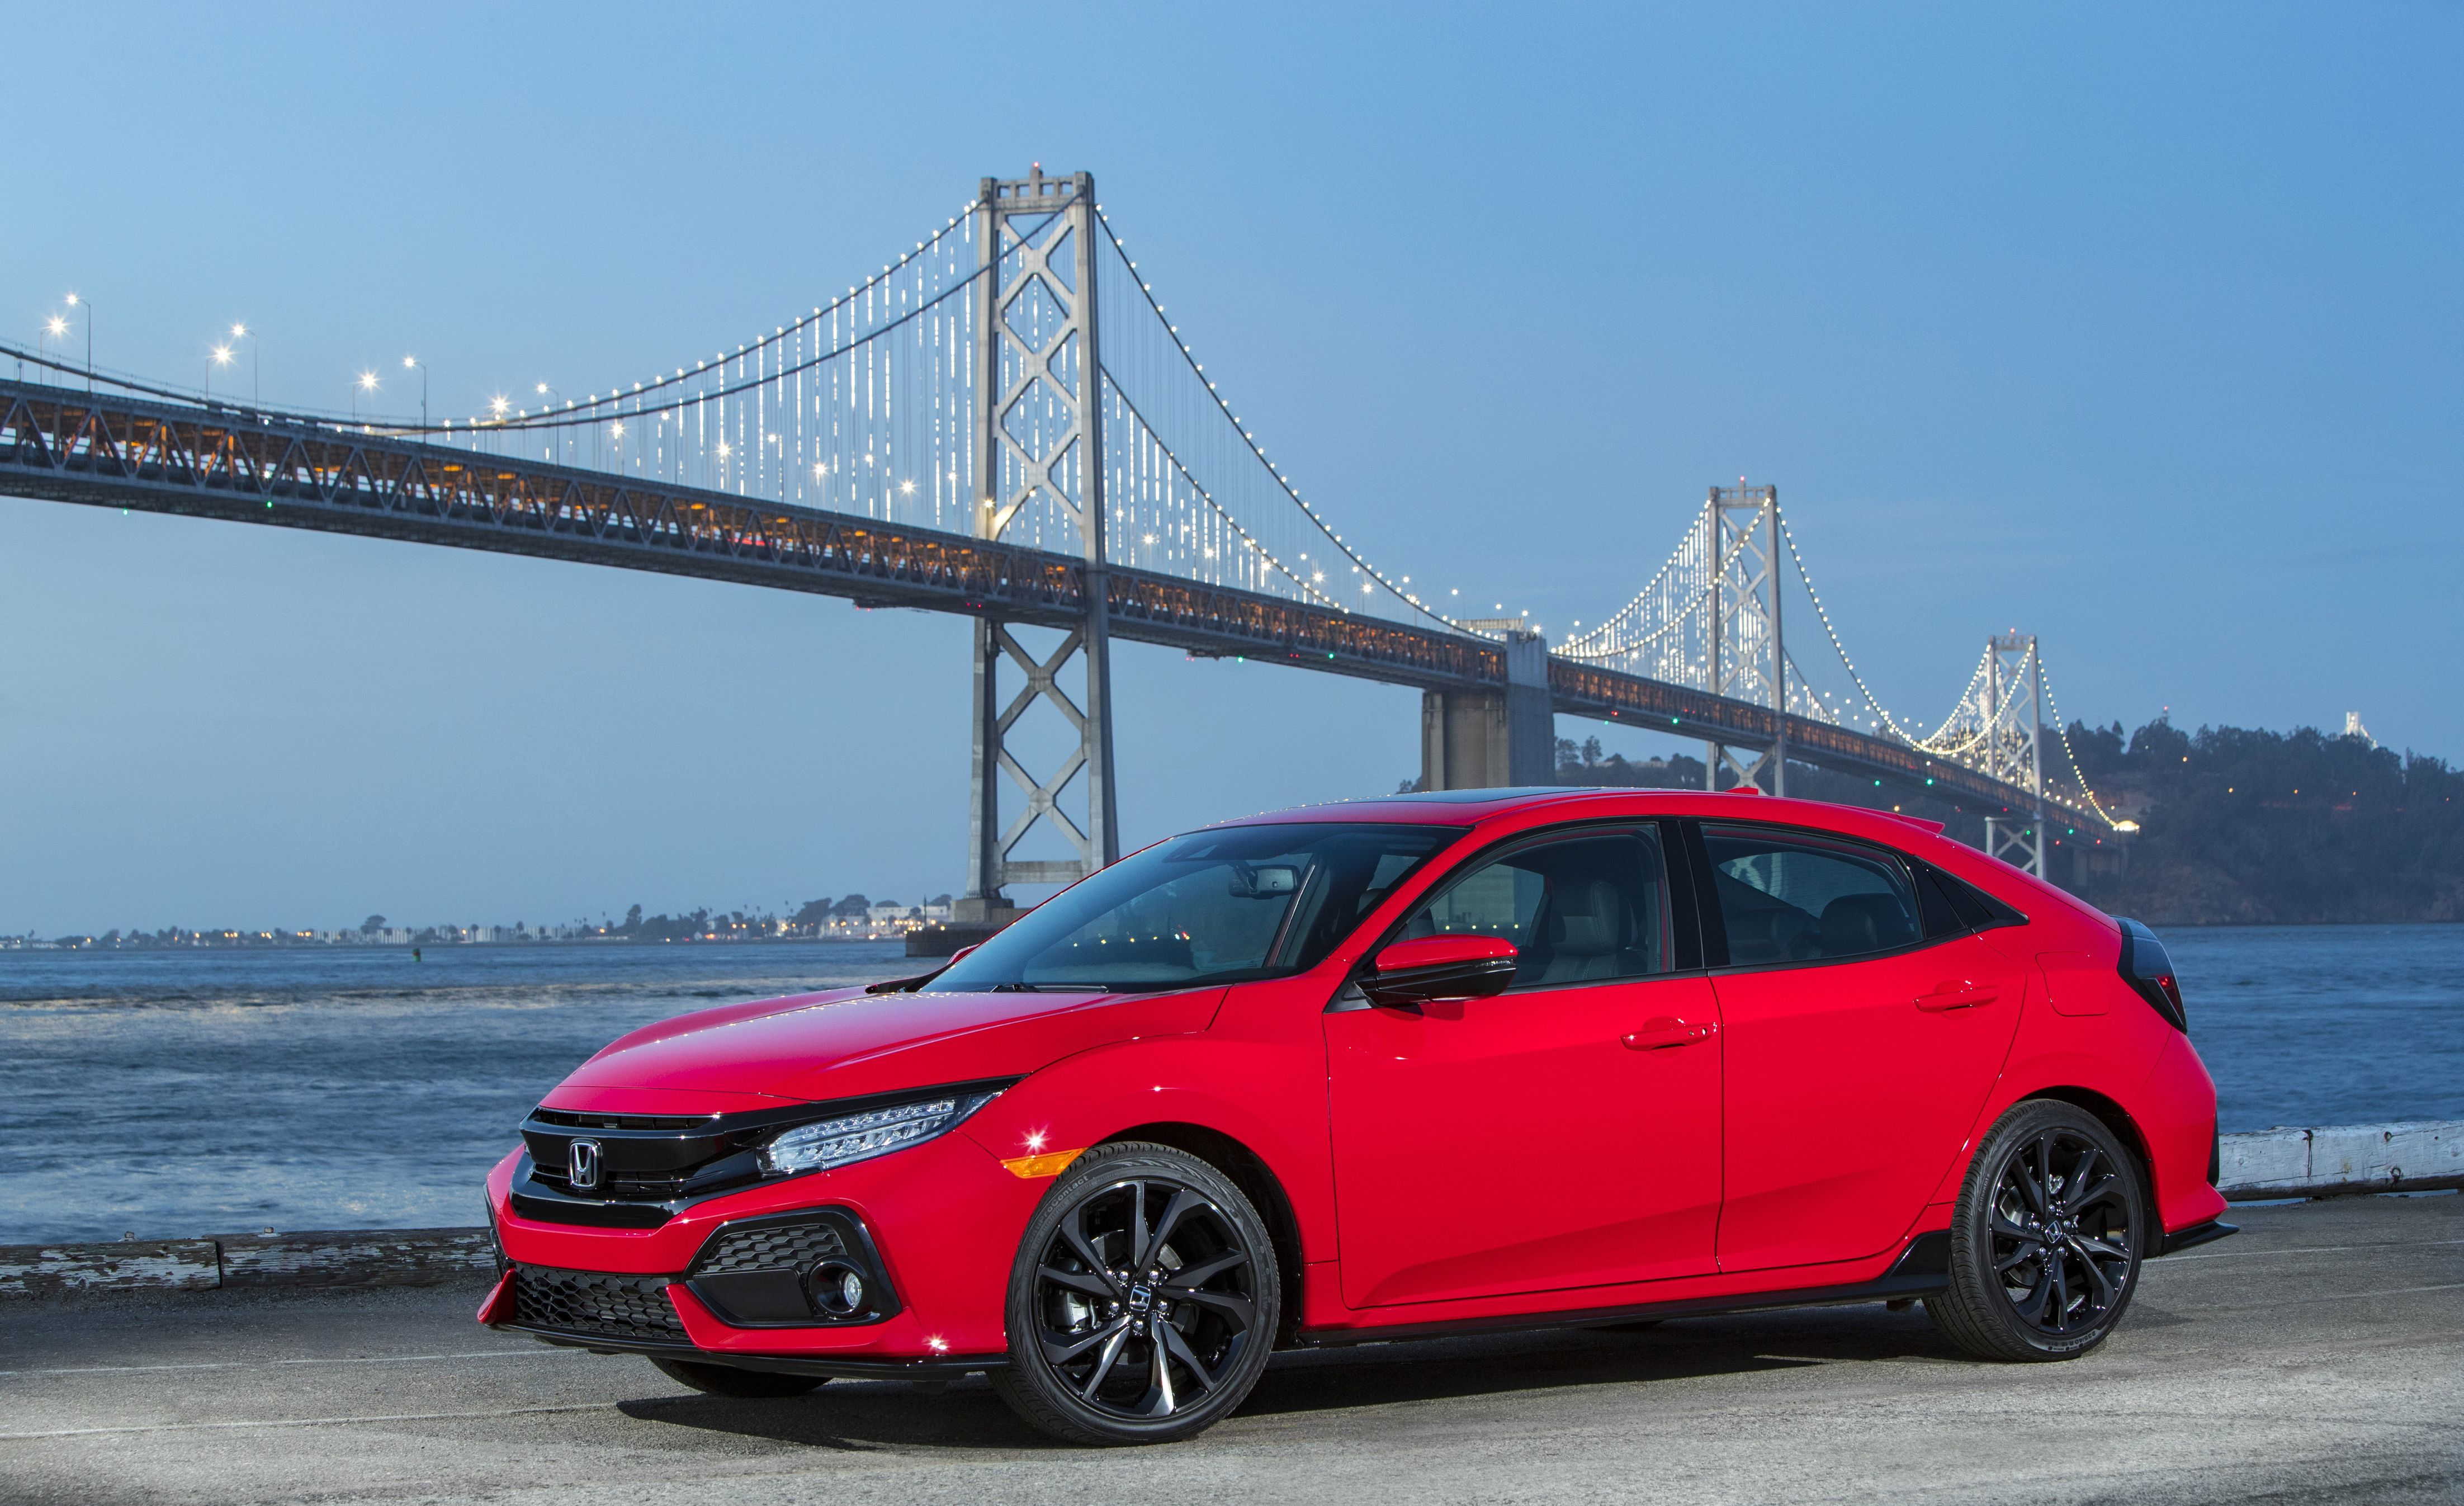 2019 Honda Civic Reviews Honda Civic Price Photos and Specs Car 